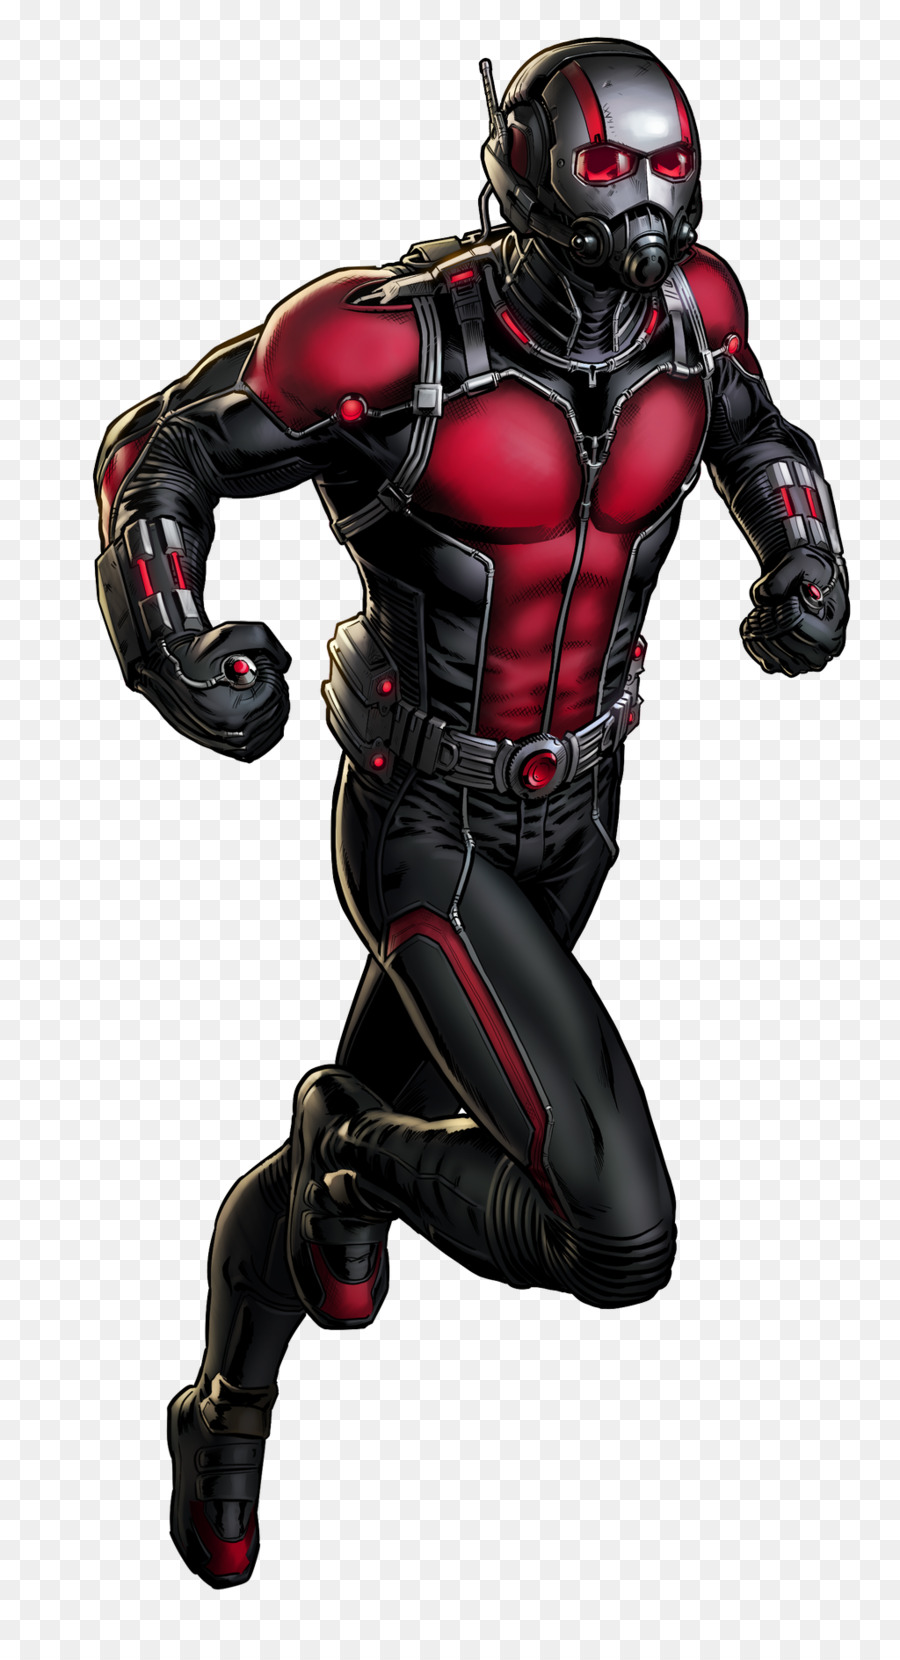 Ant-Man Marvel: Avengers Alliance Hank Pym Wasp Spider-Man - Ant Man png download - 1024*1878 - Free Transparent Antman png Download.